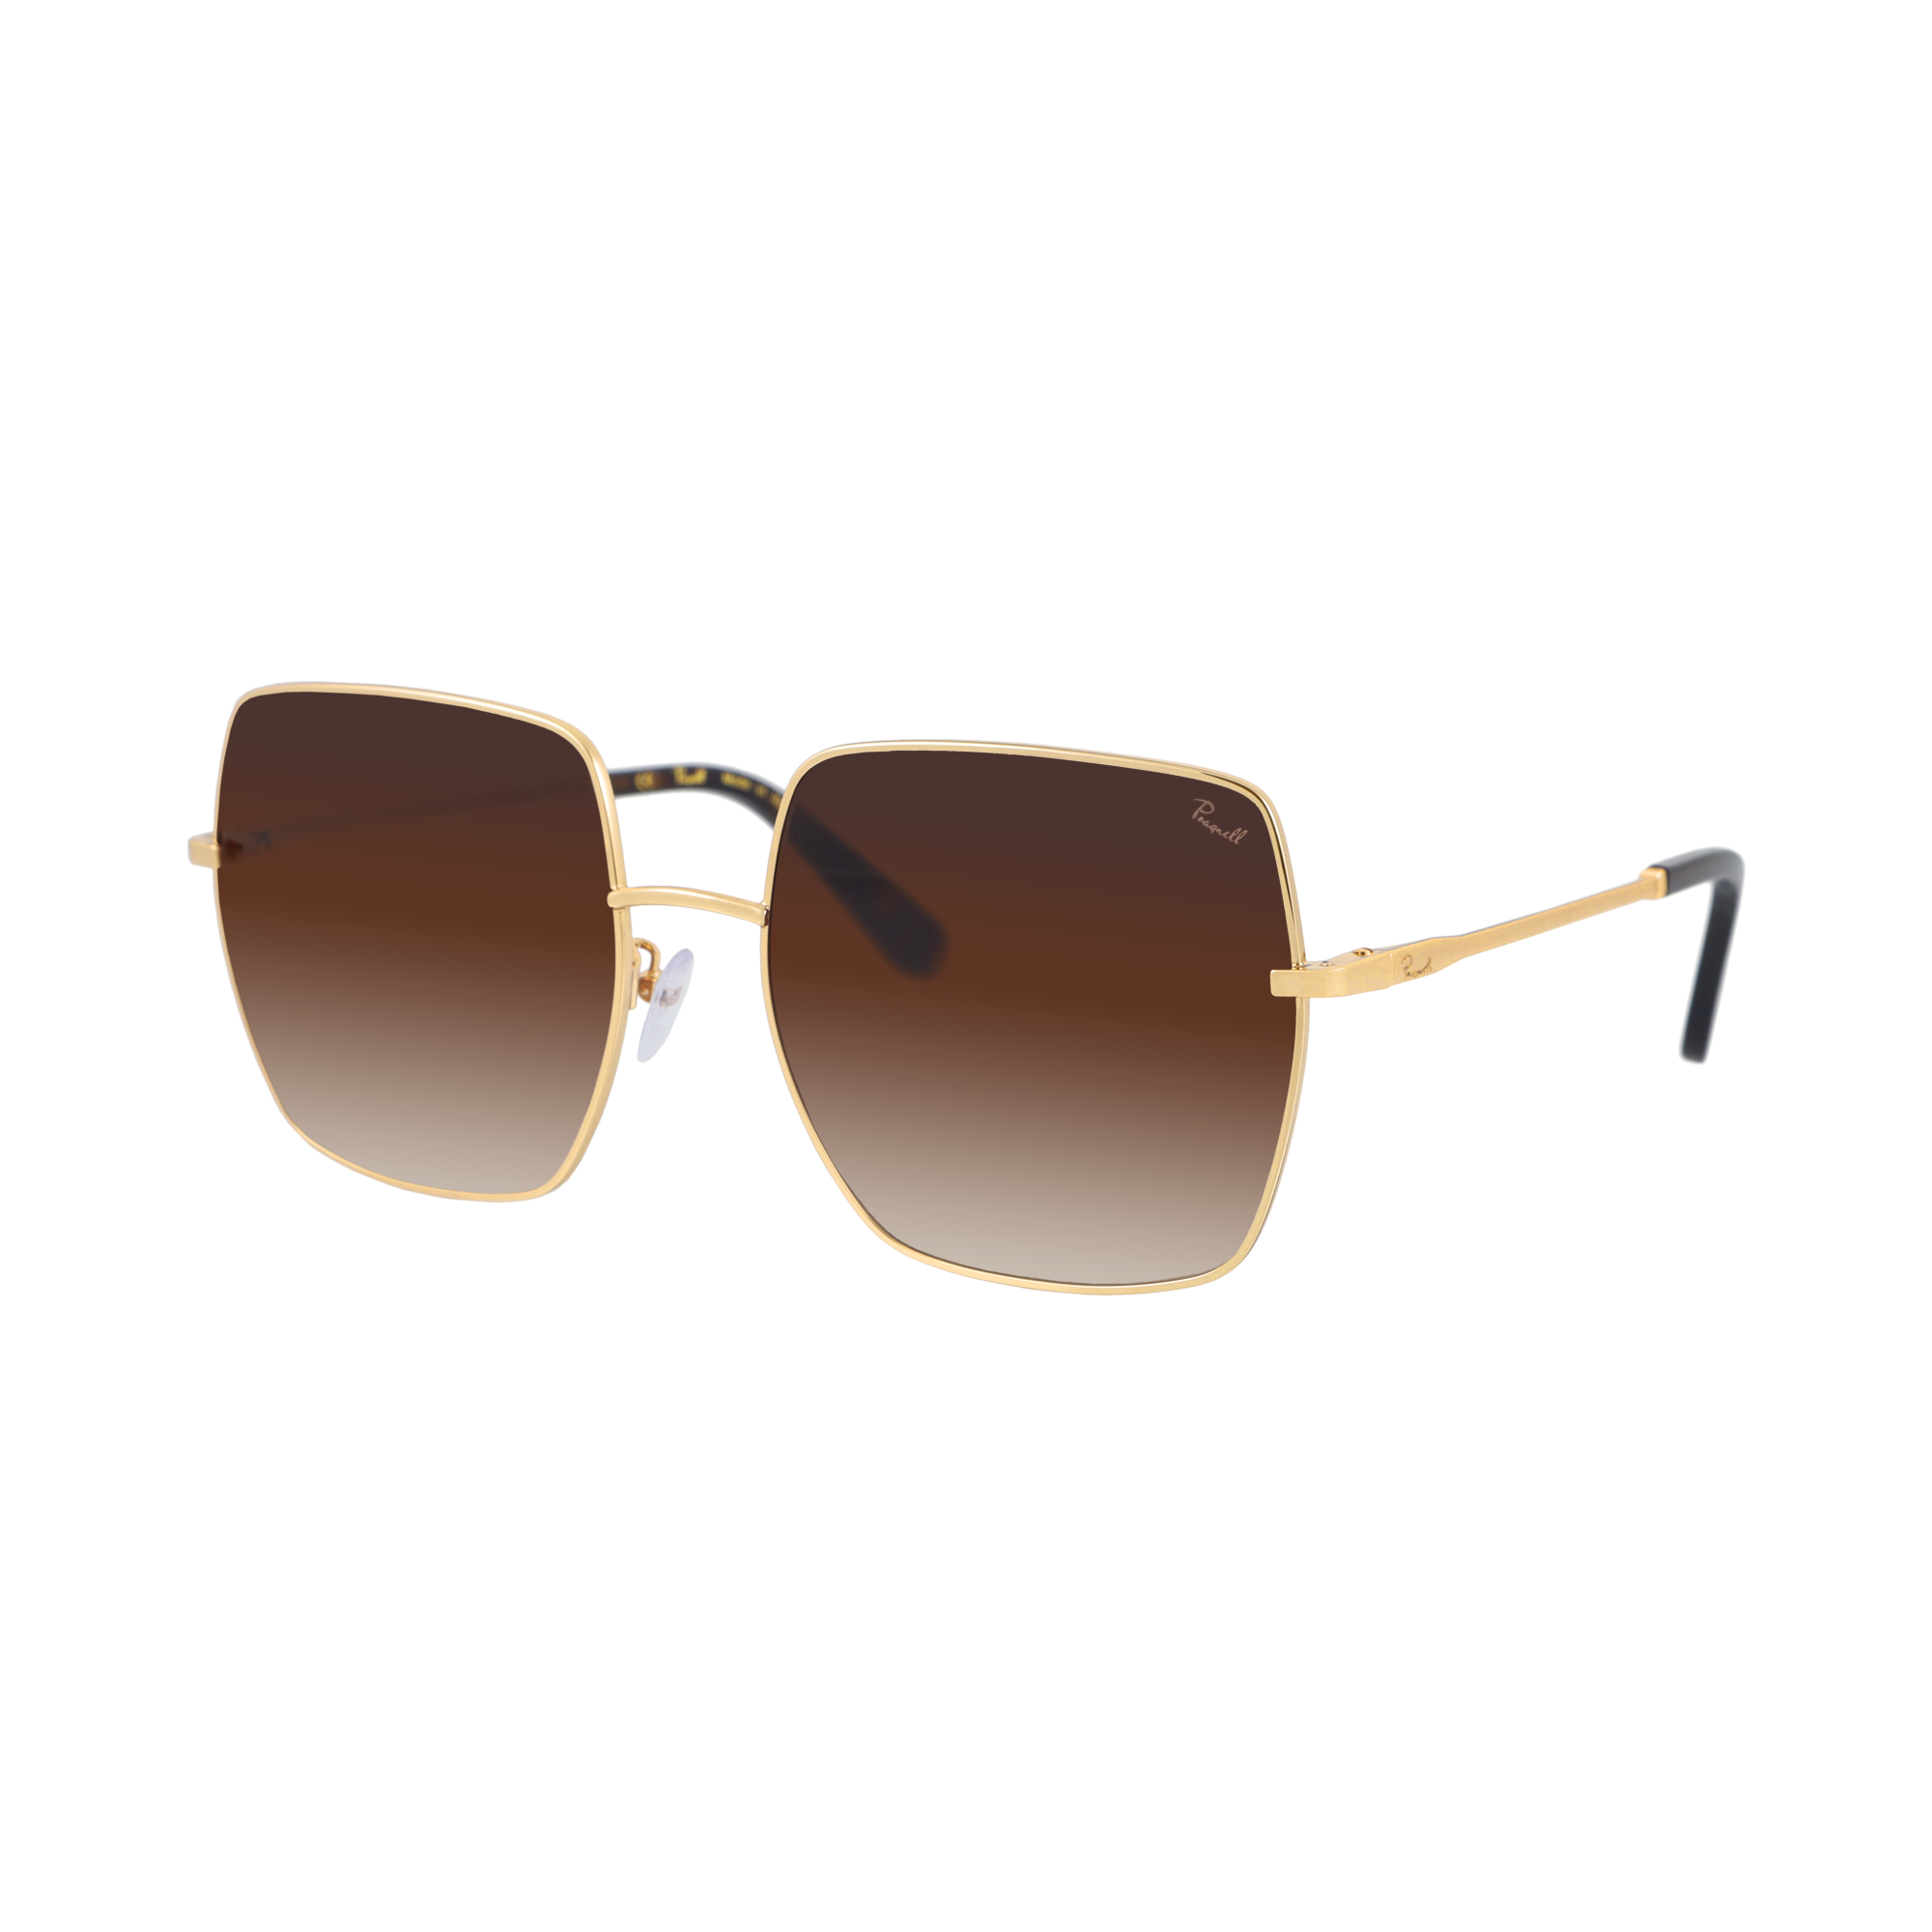 Pragnell Ladies Sunglasses Brown tint, UV400 protection_1